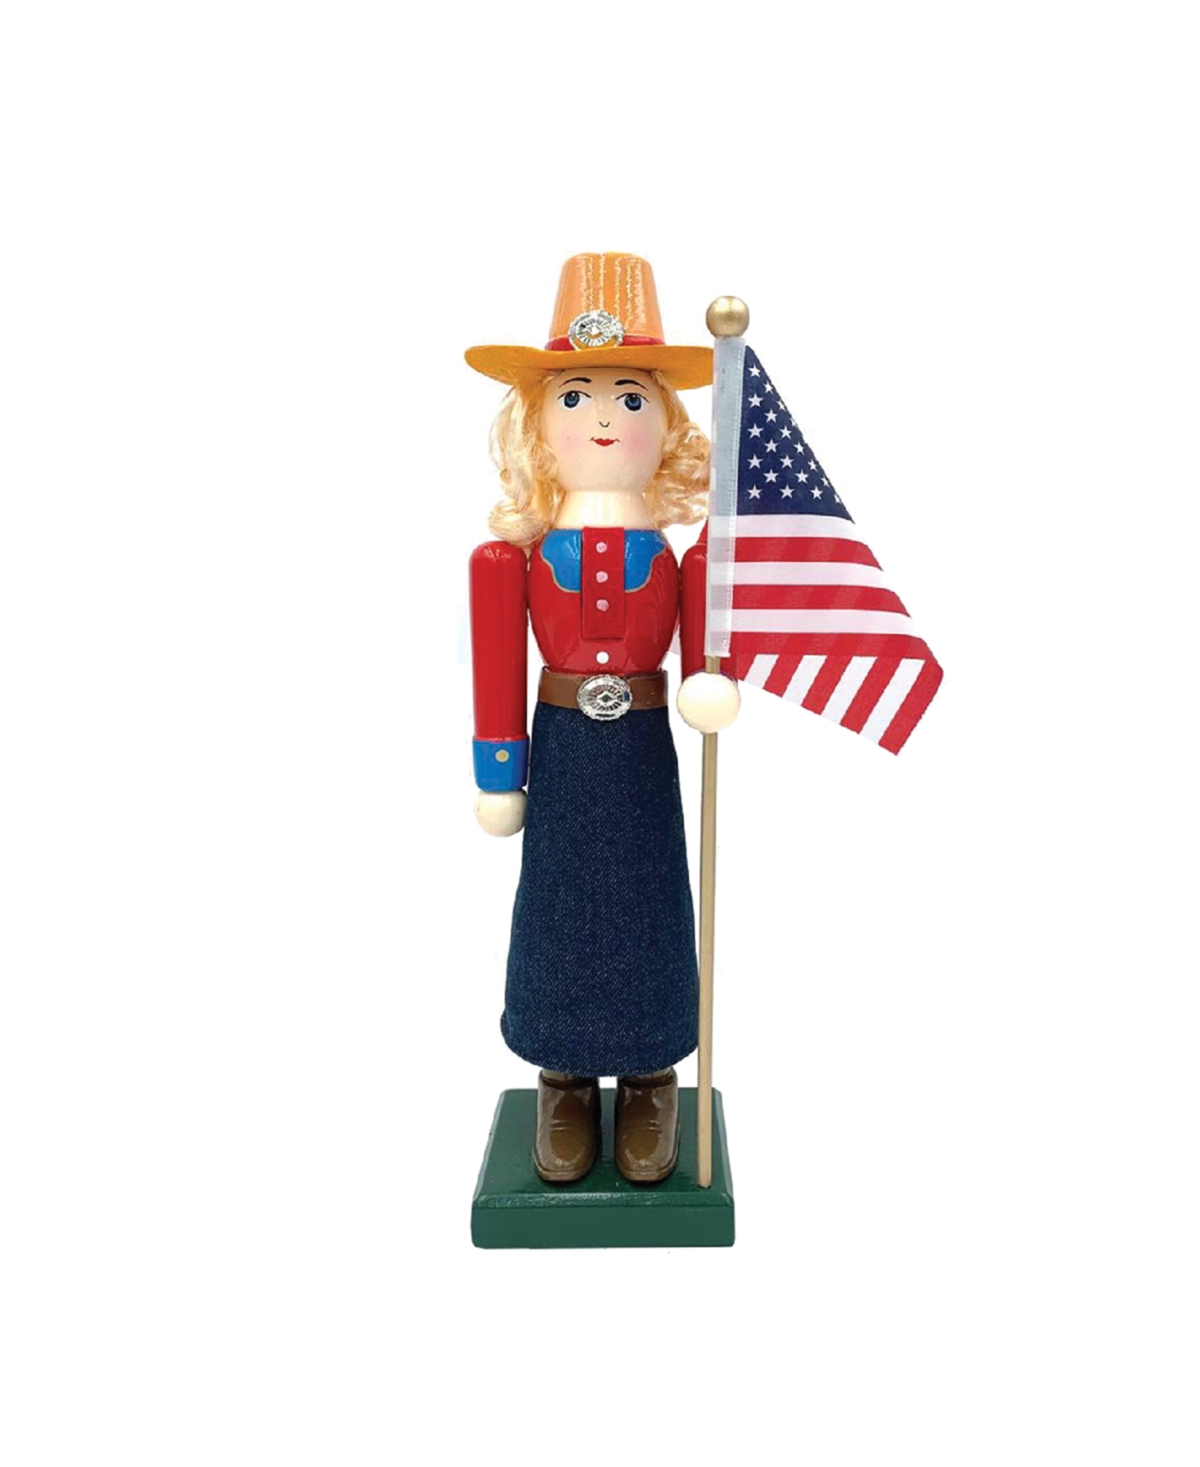 14" Cowgirl and Flag Nutcracker Figurine - Multi